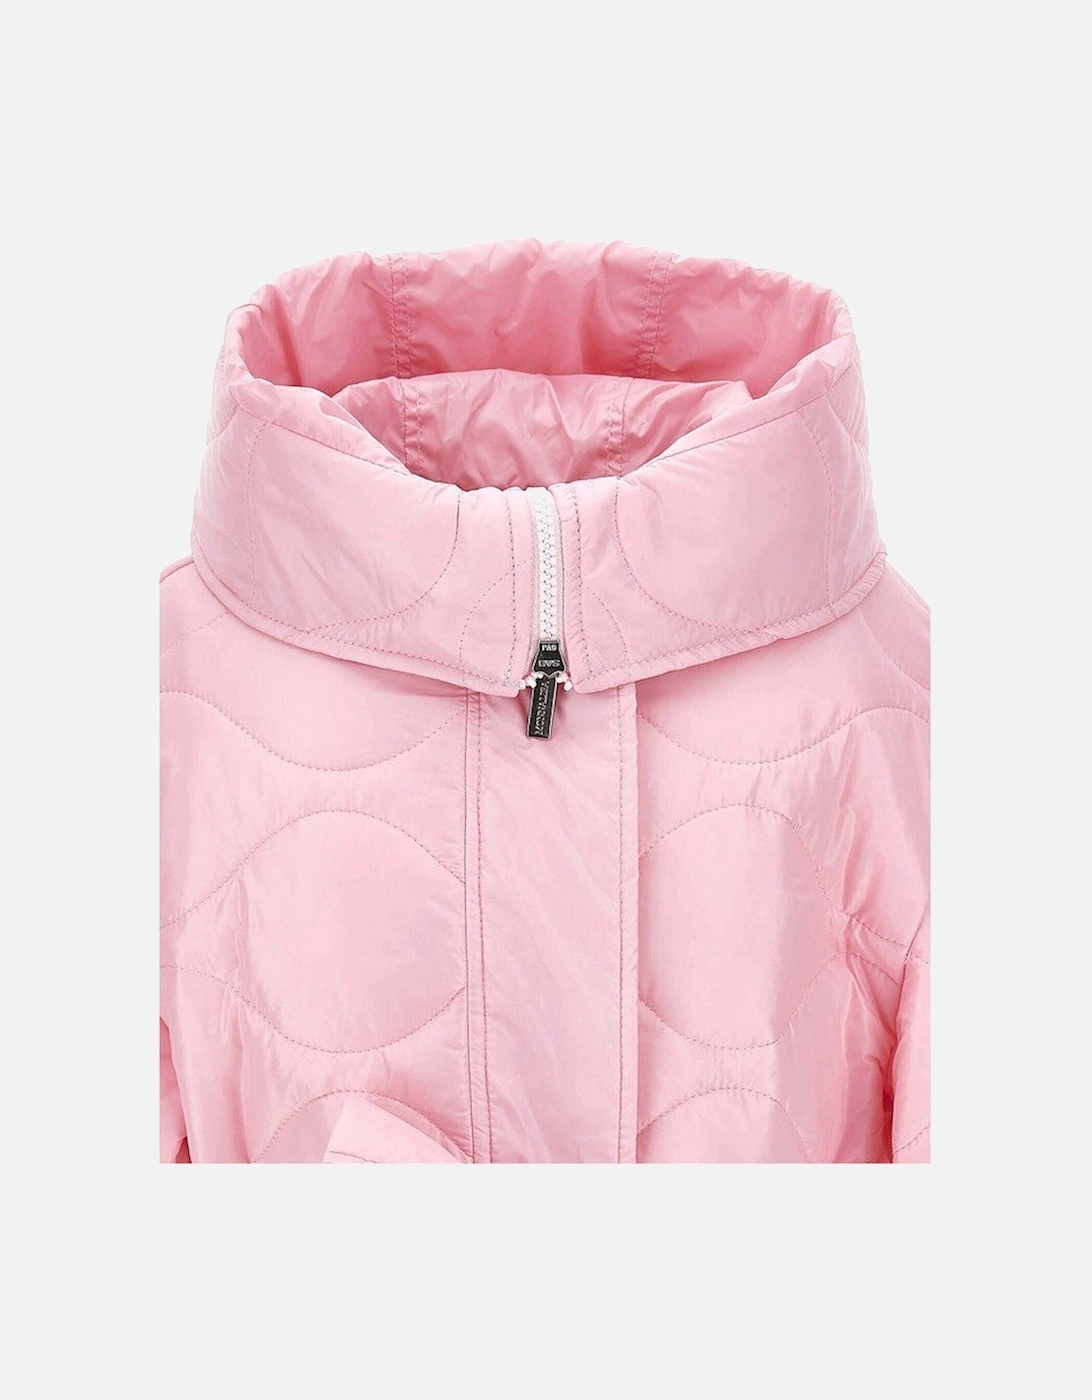 Girls Pink Hooded Jacket